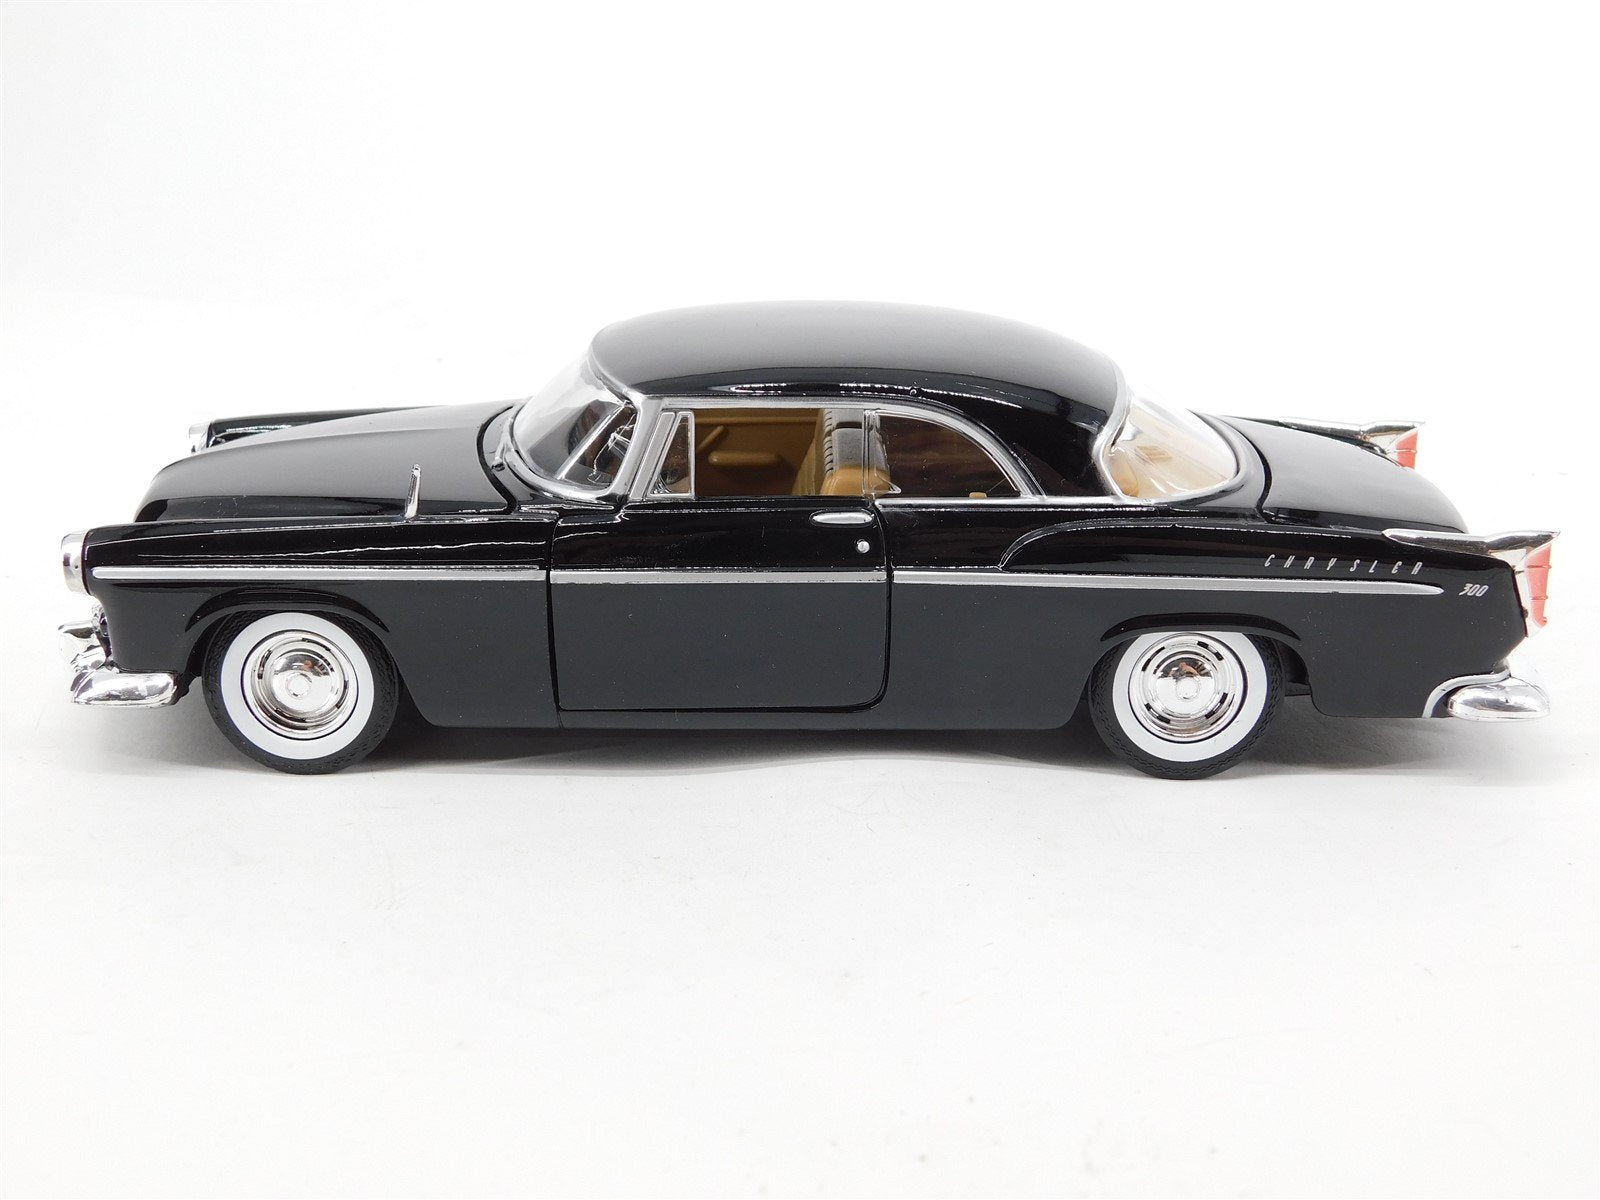 1:24 Scale Motor Max #73302 Die-Cast Automobile 1955 Chrysler C300 - Black